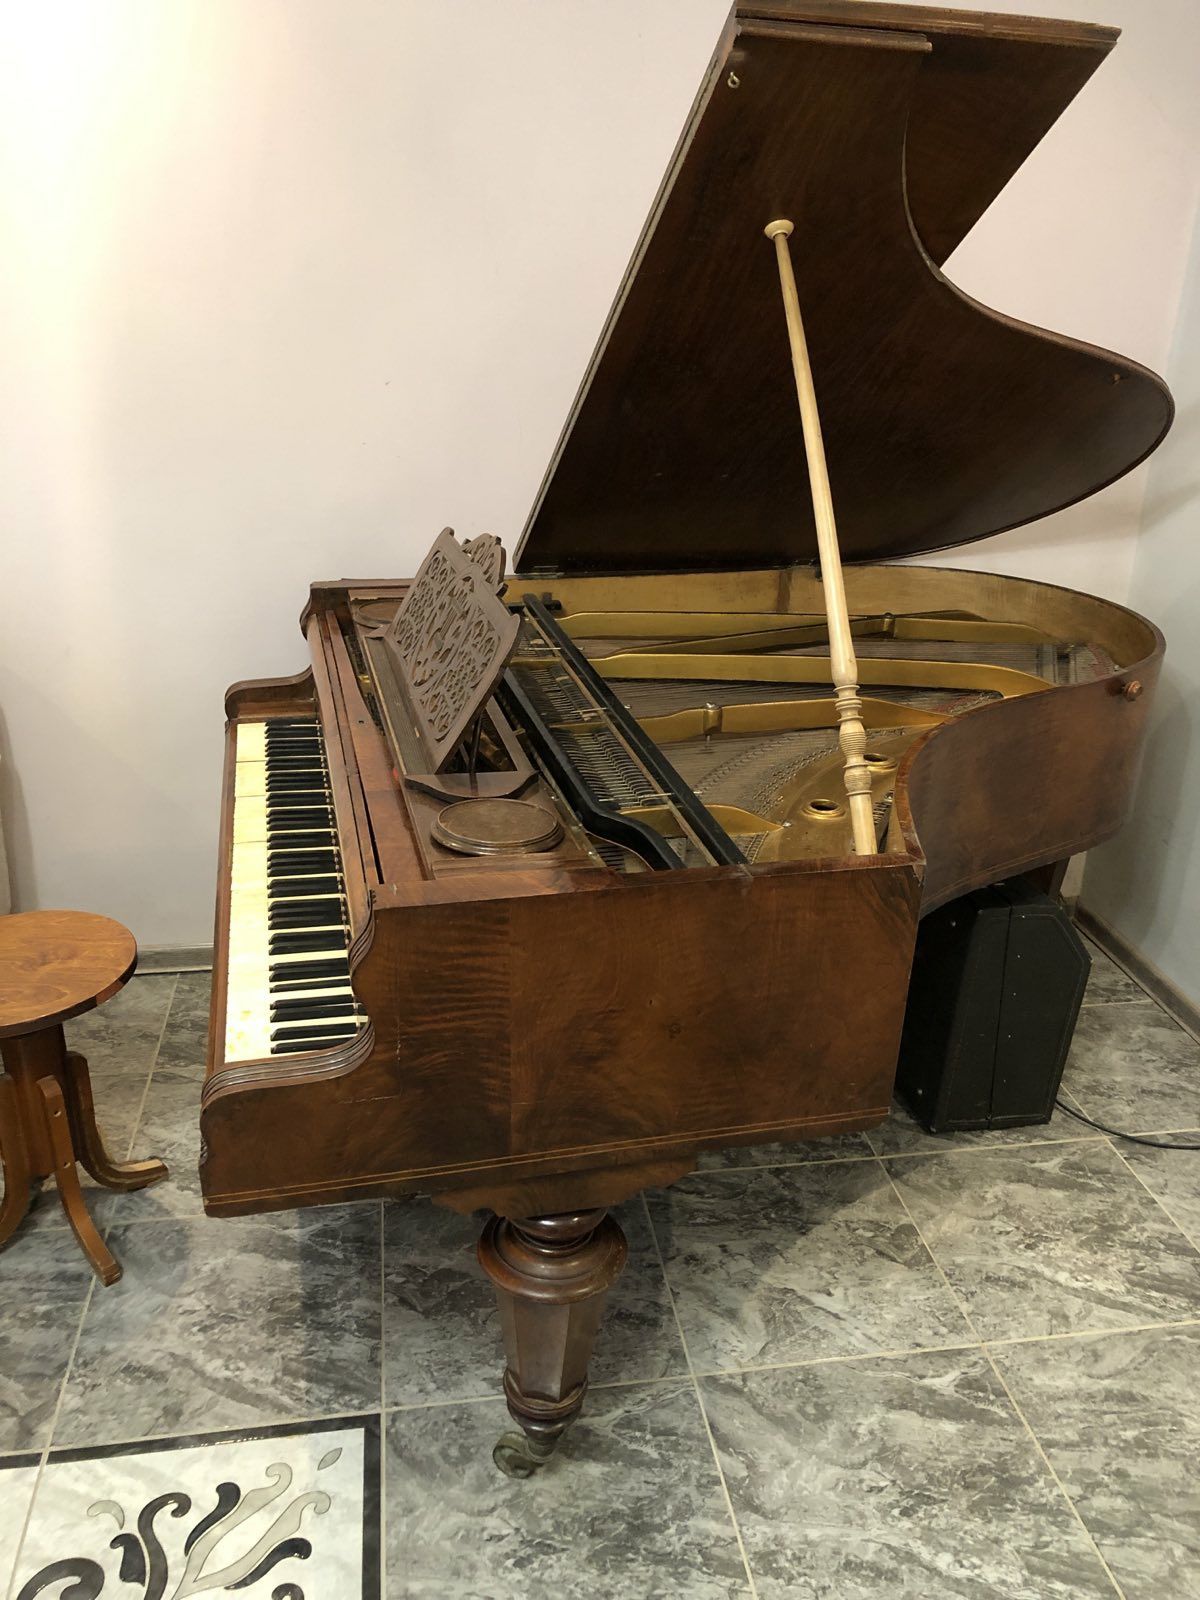 Продамо старовинний рояль